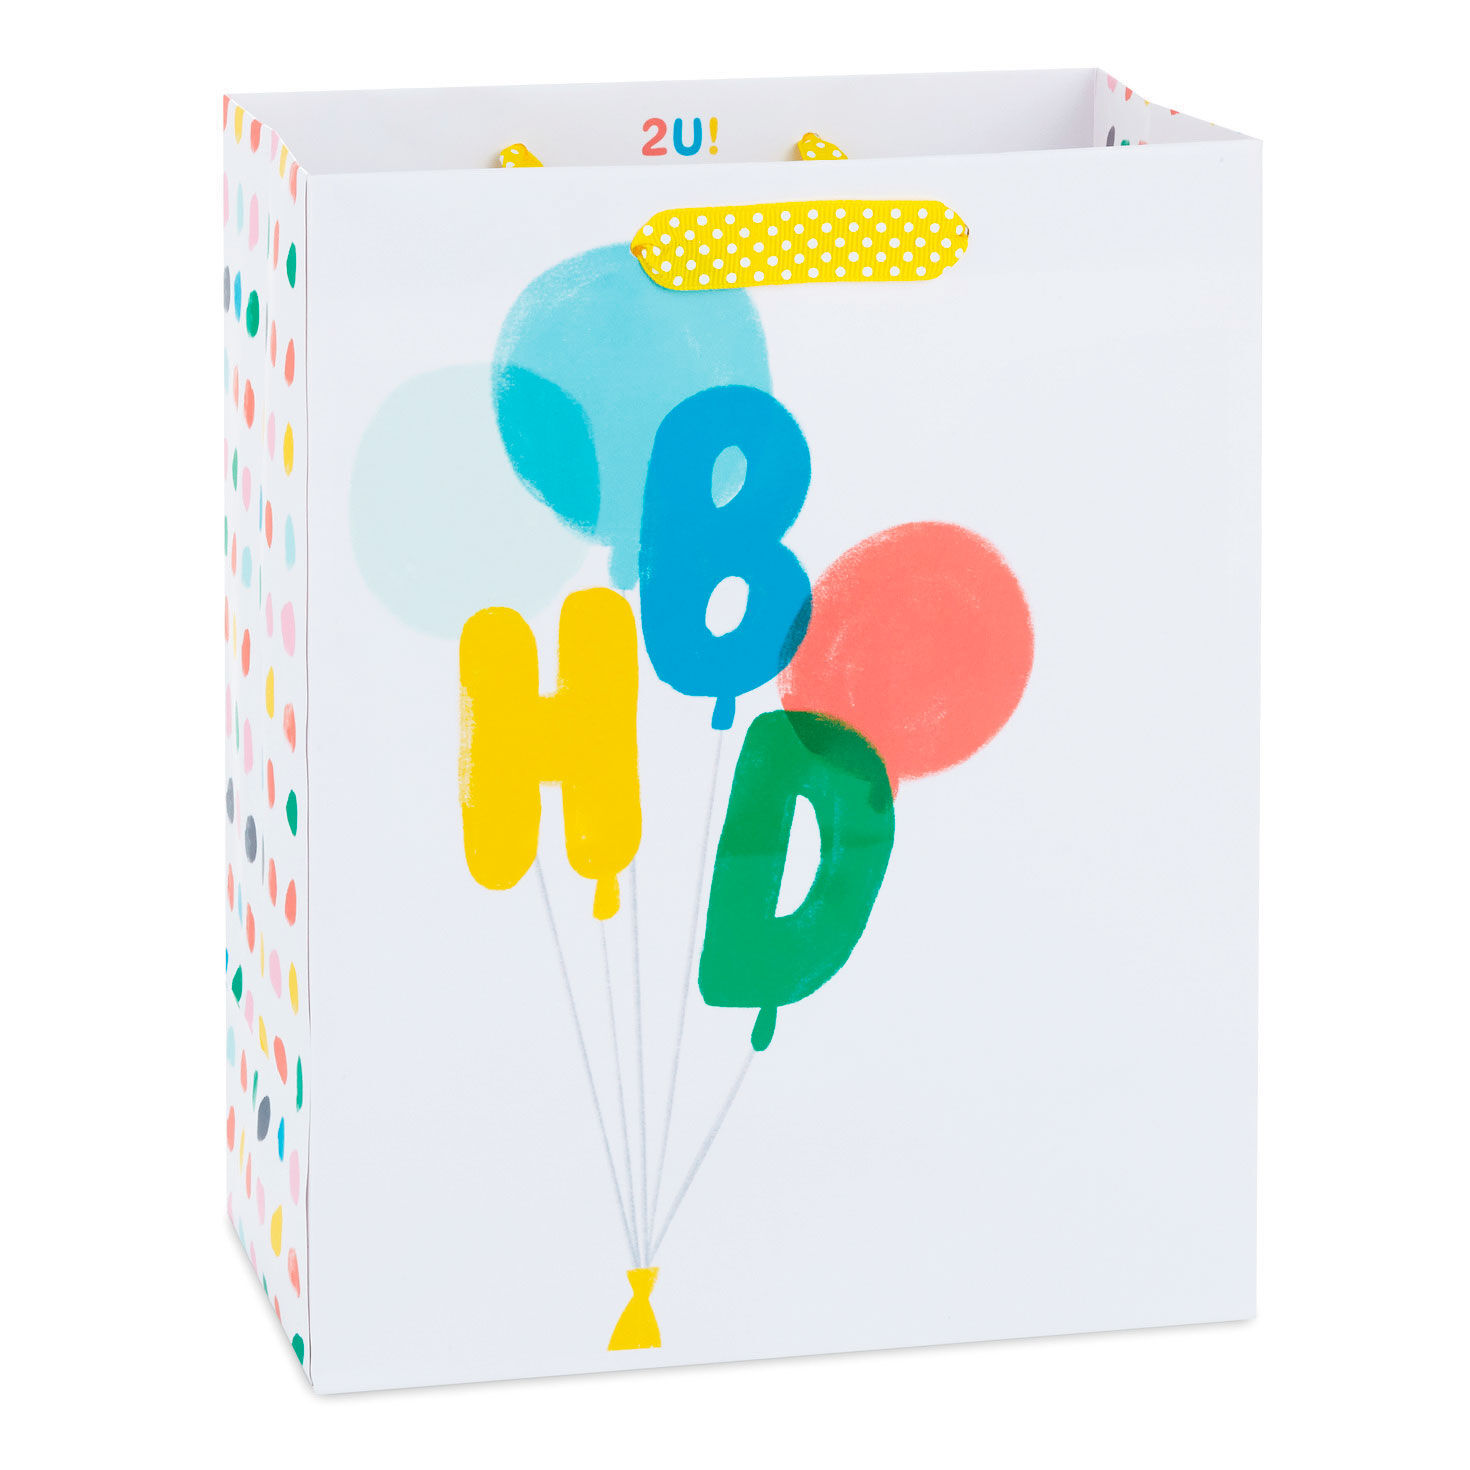 Current Happy Birthday Confetti Jumbo Roll Heavyweight Gift Wrap